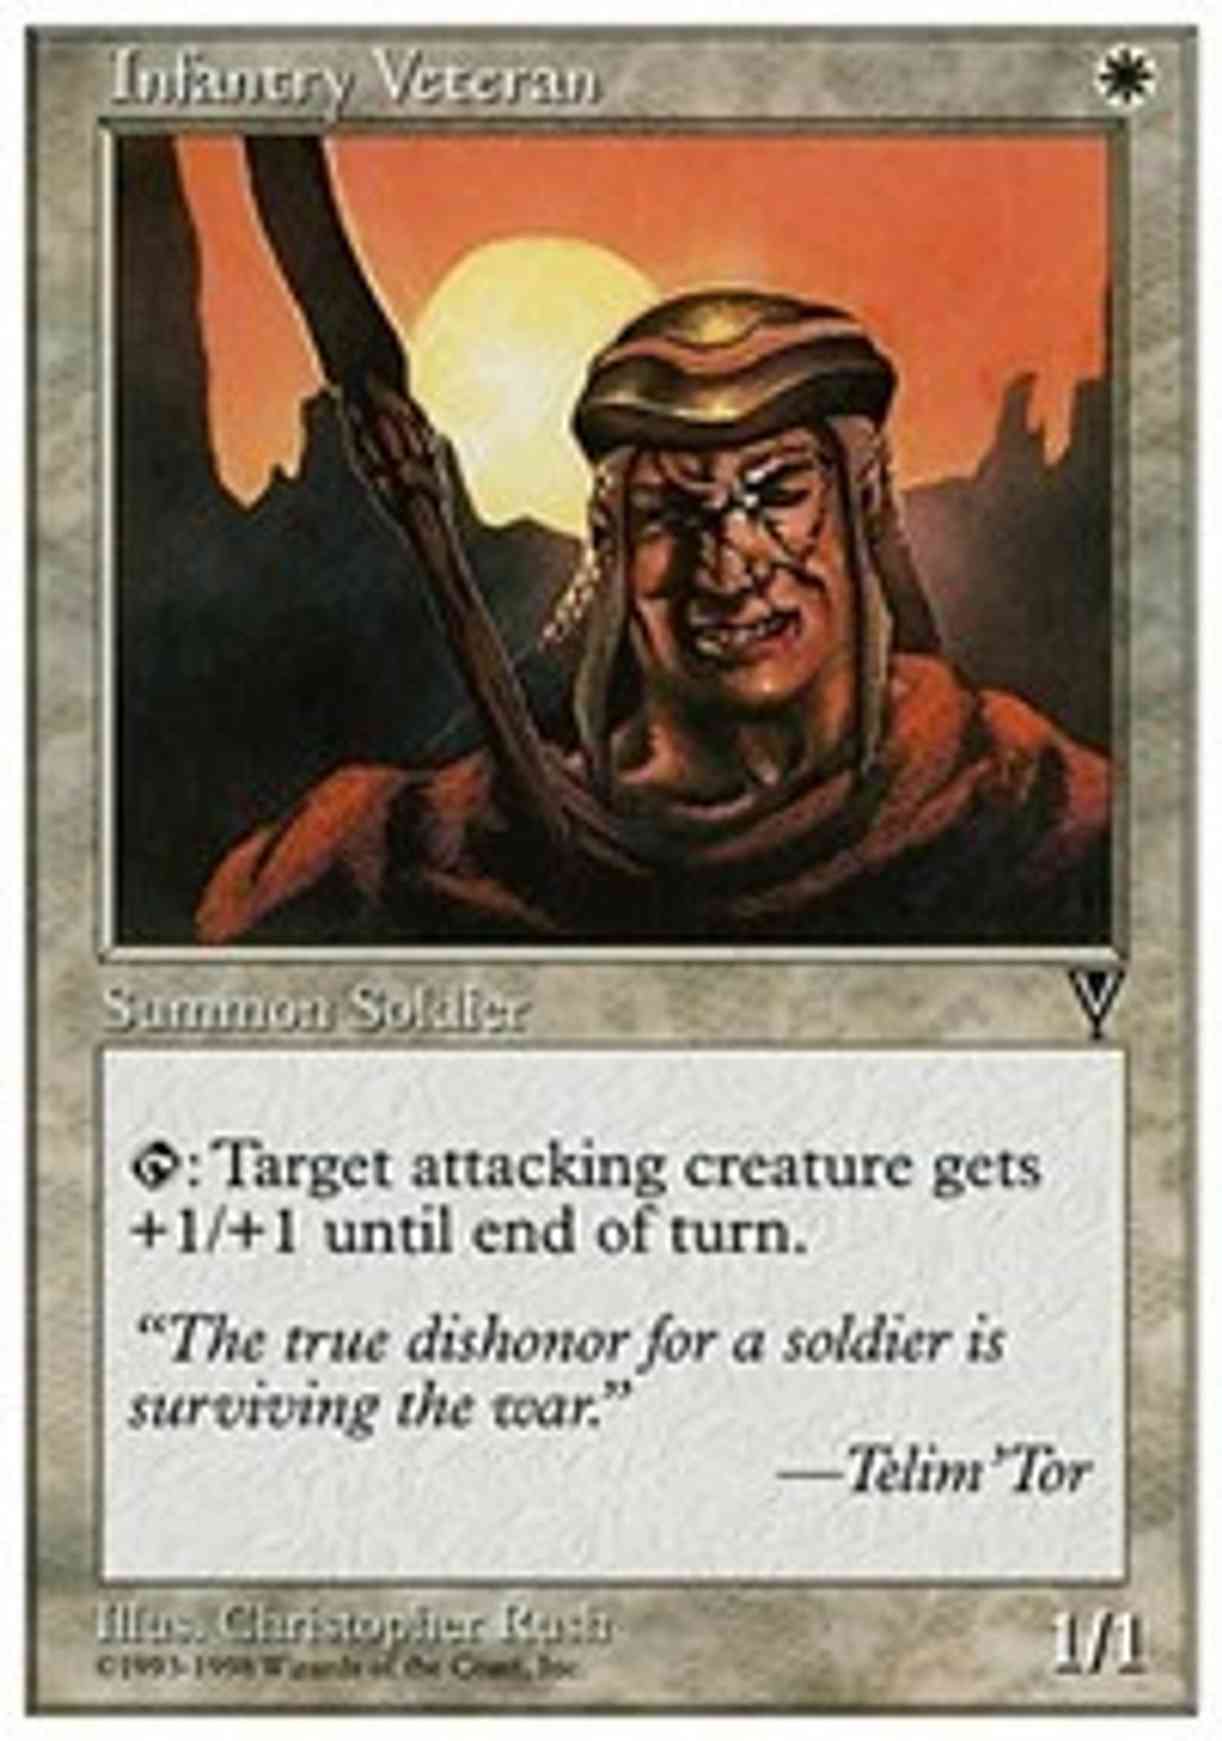 Infantry Veteran magic card front